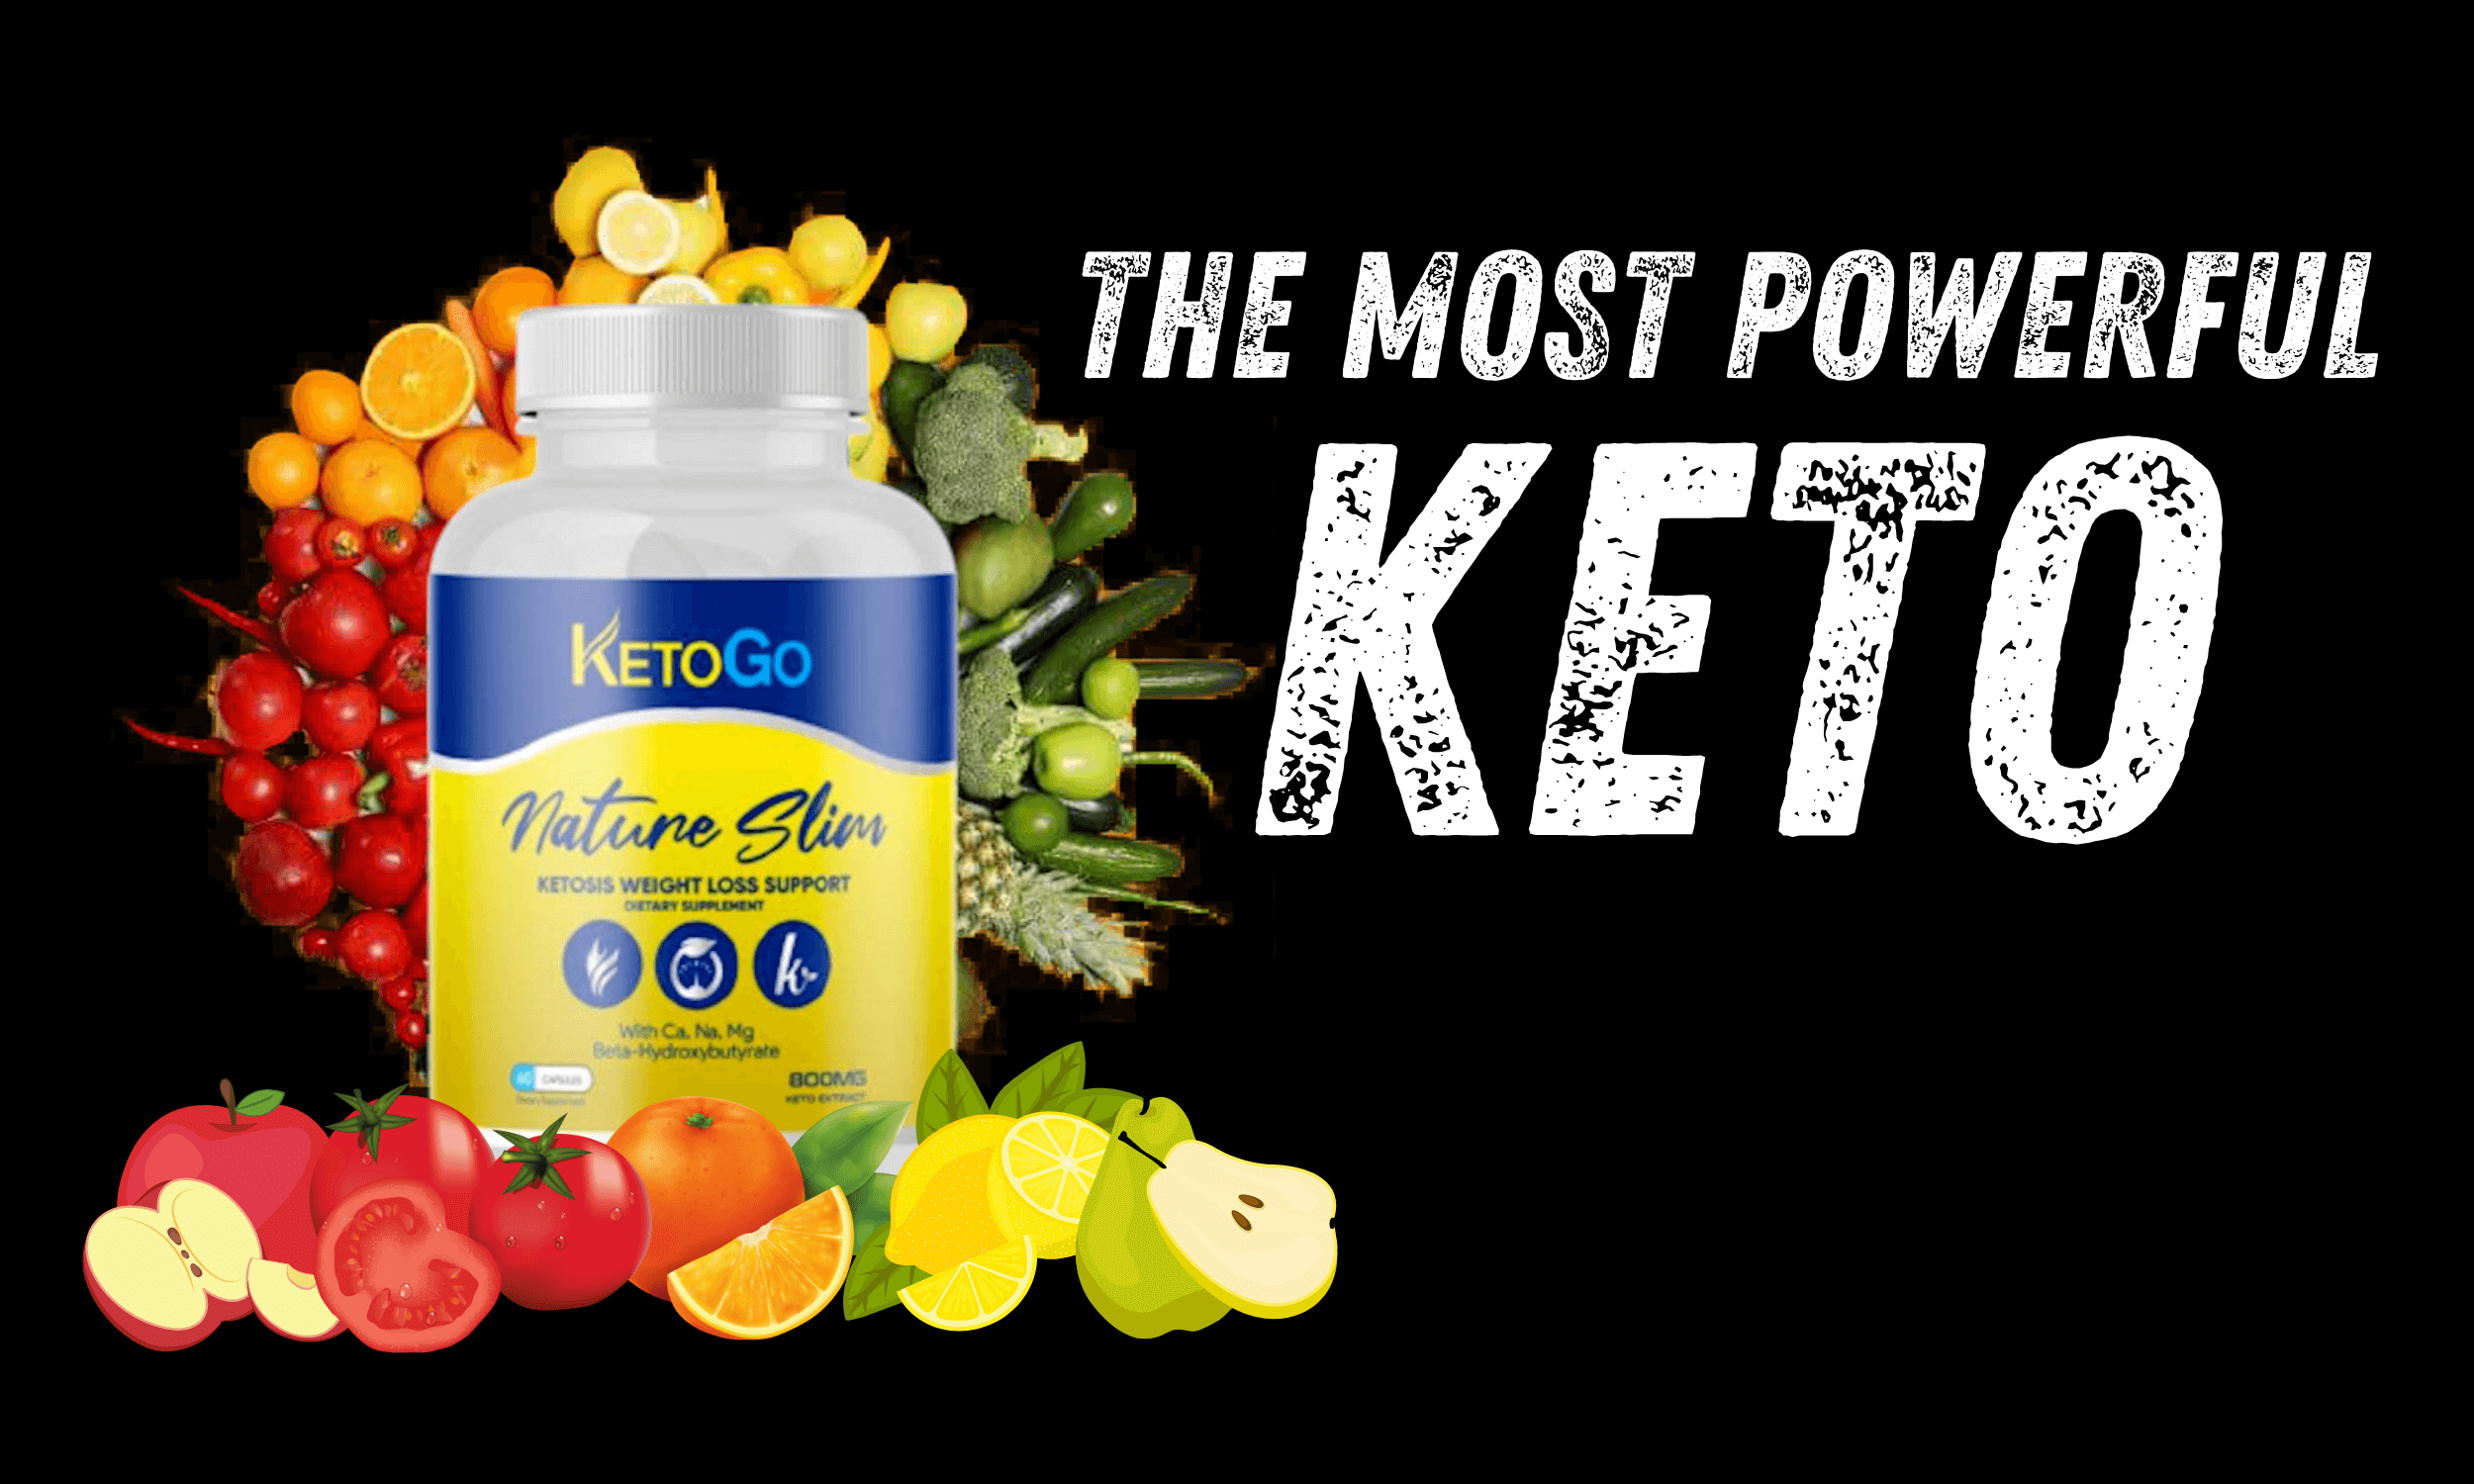 KetoGO Reviews – Do Nature Slim Keto GO Diet Pills Work for Weight Loss? [LATEST REVIEW]